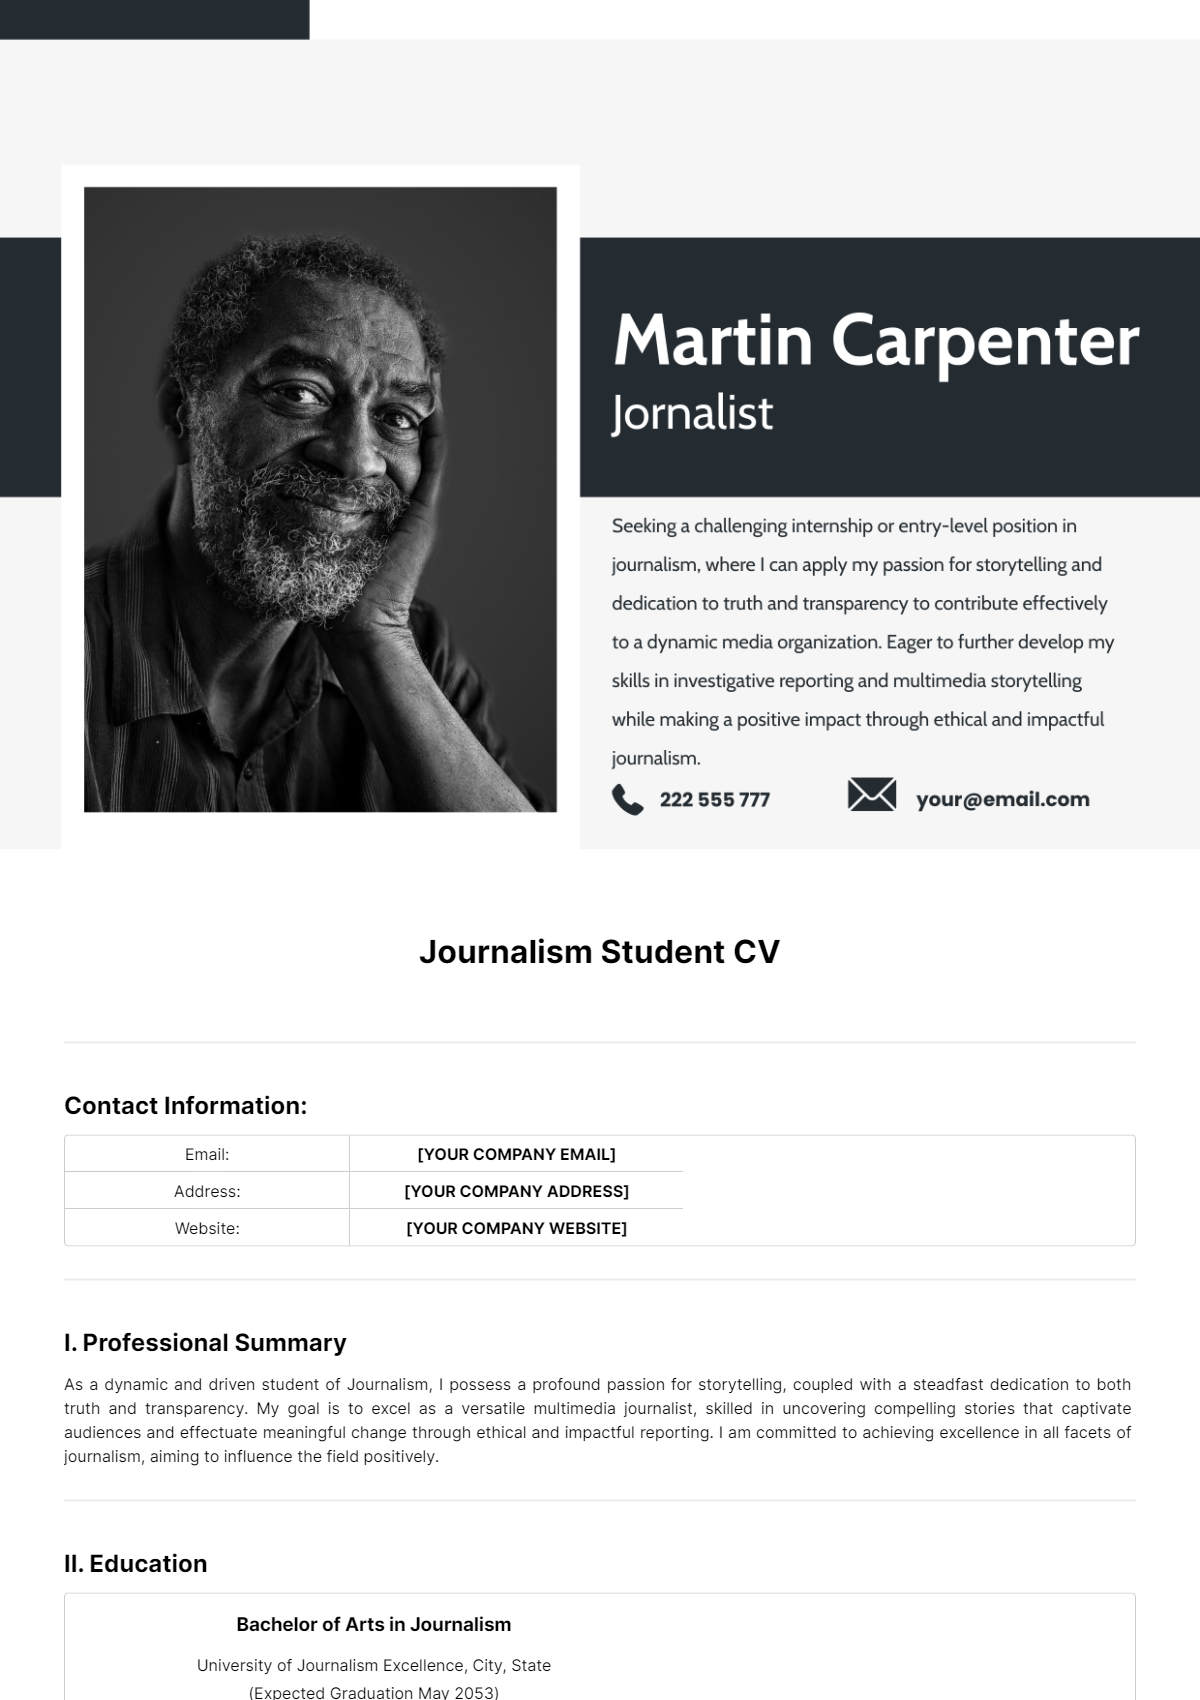 Free Journalism Student CV Template